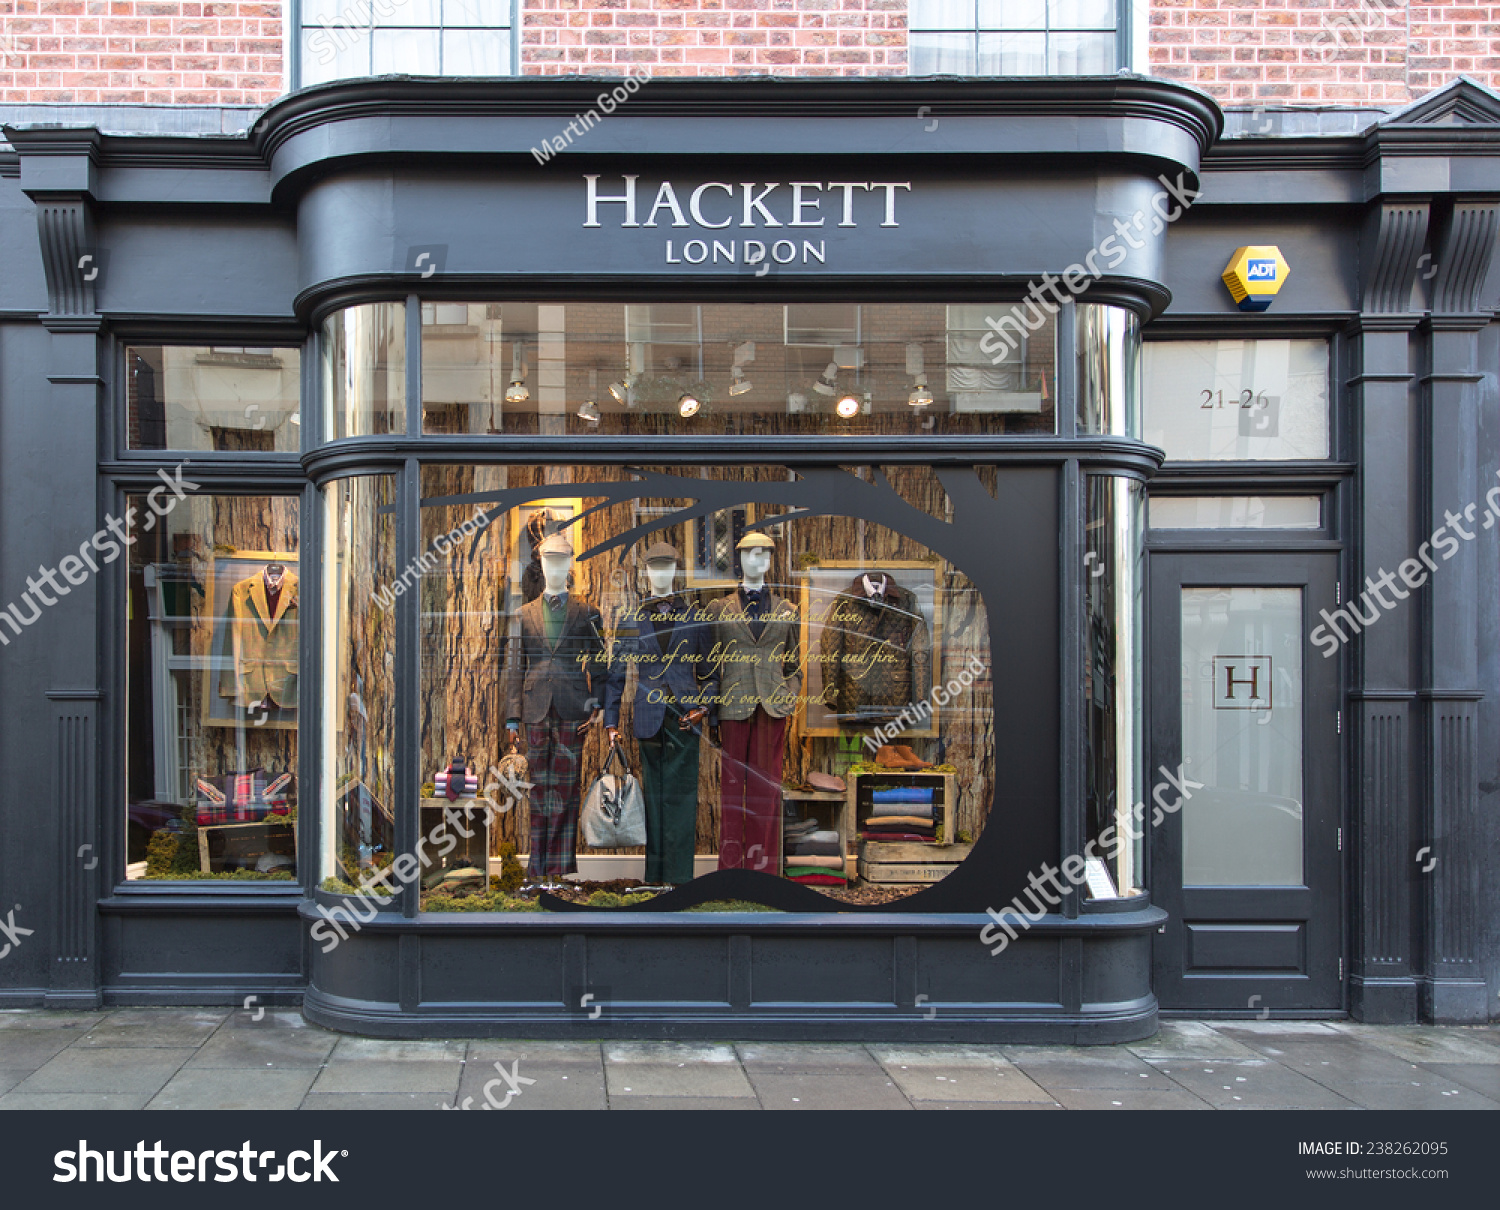 hackett london shop